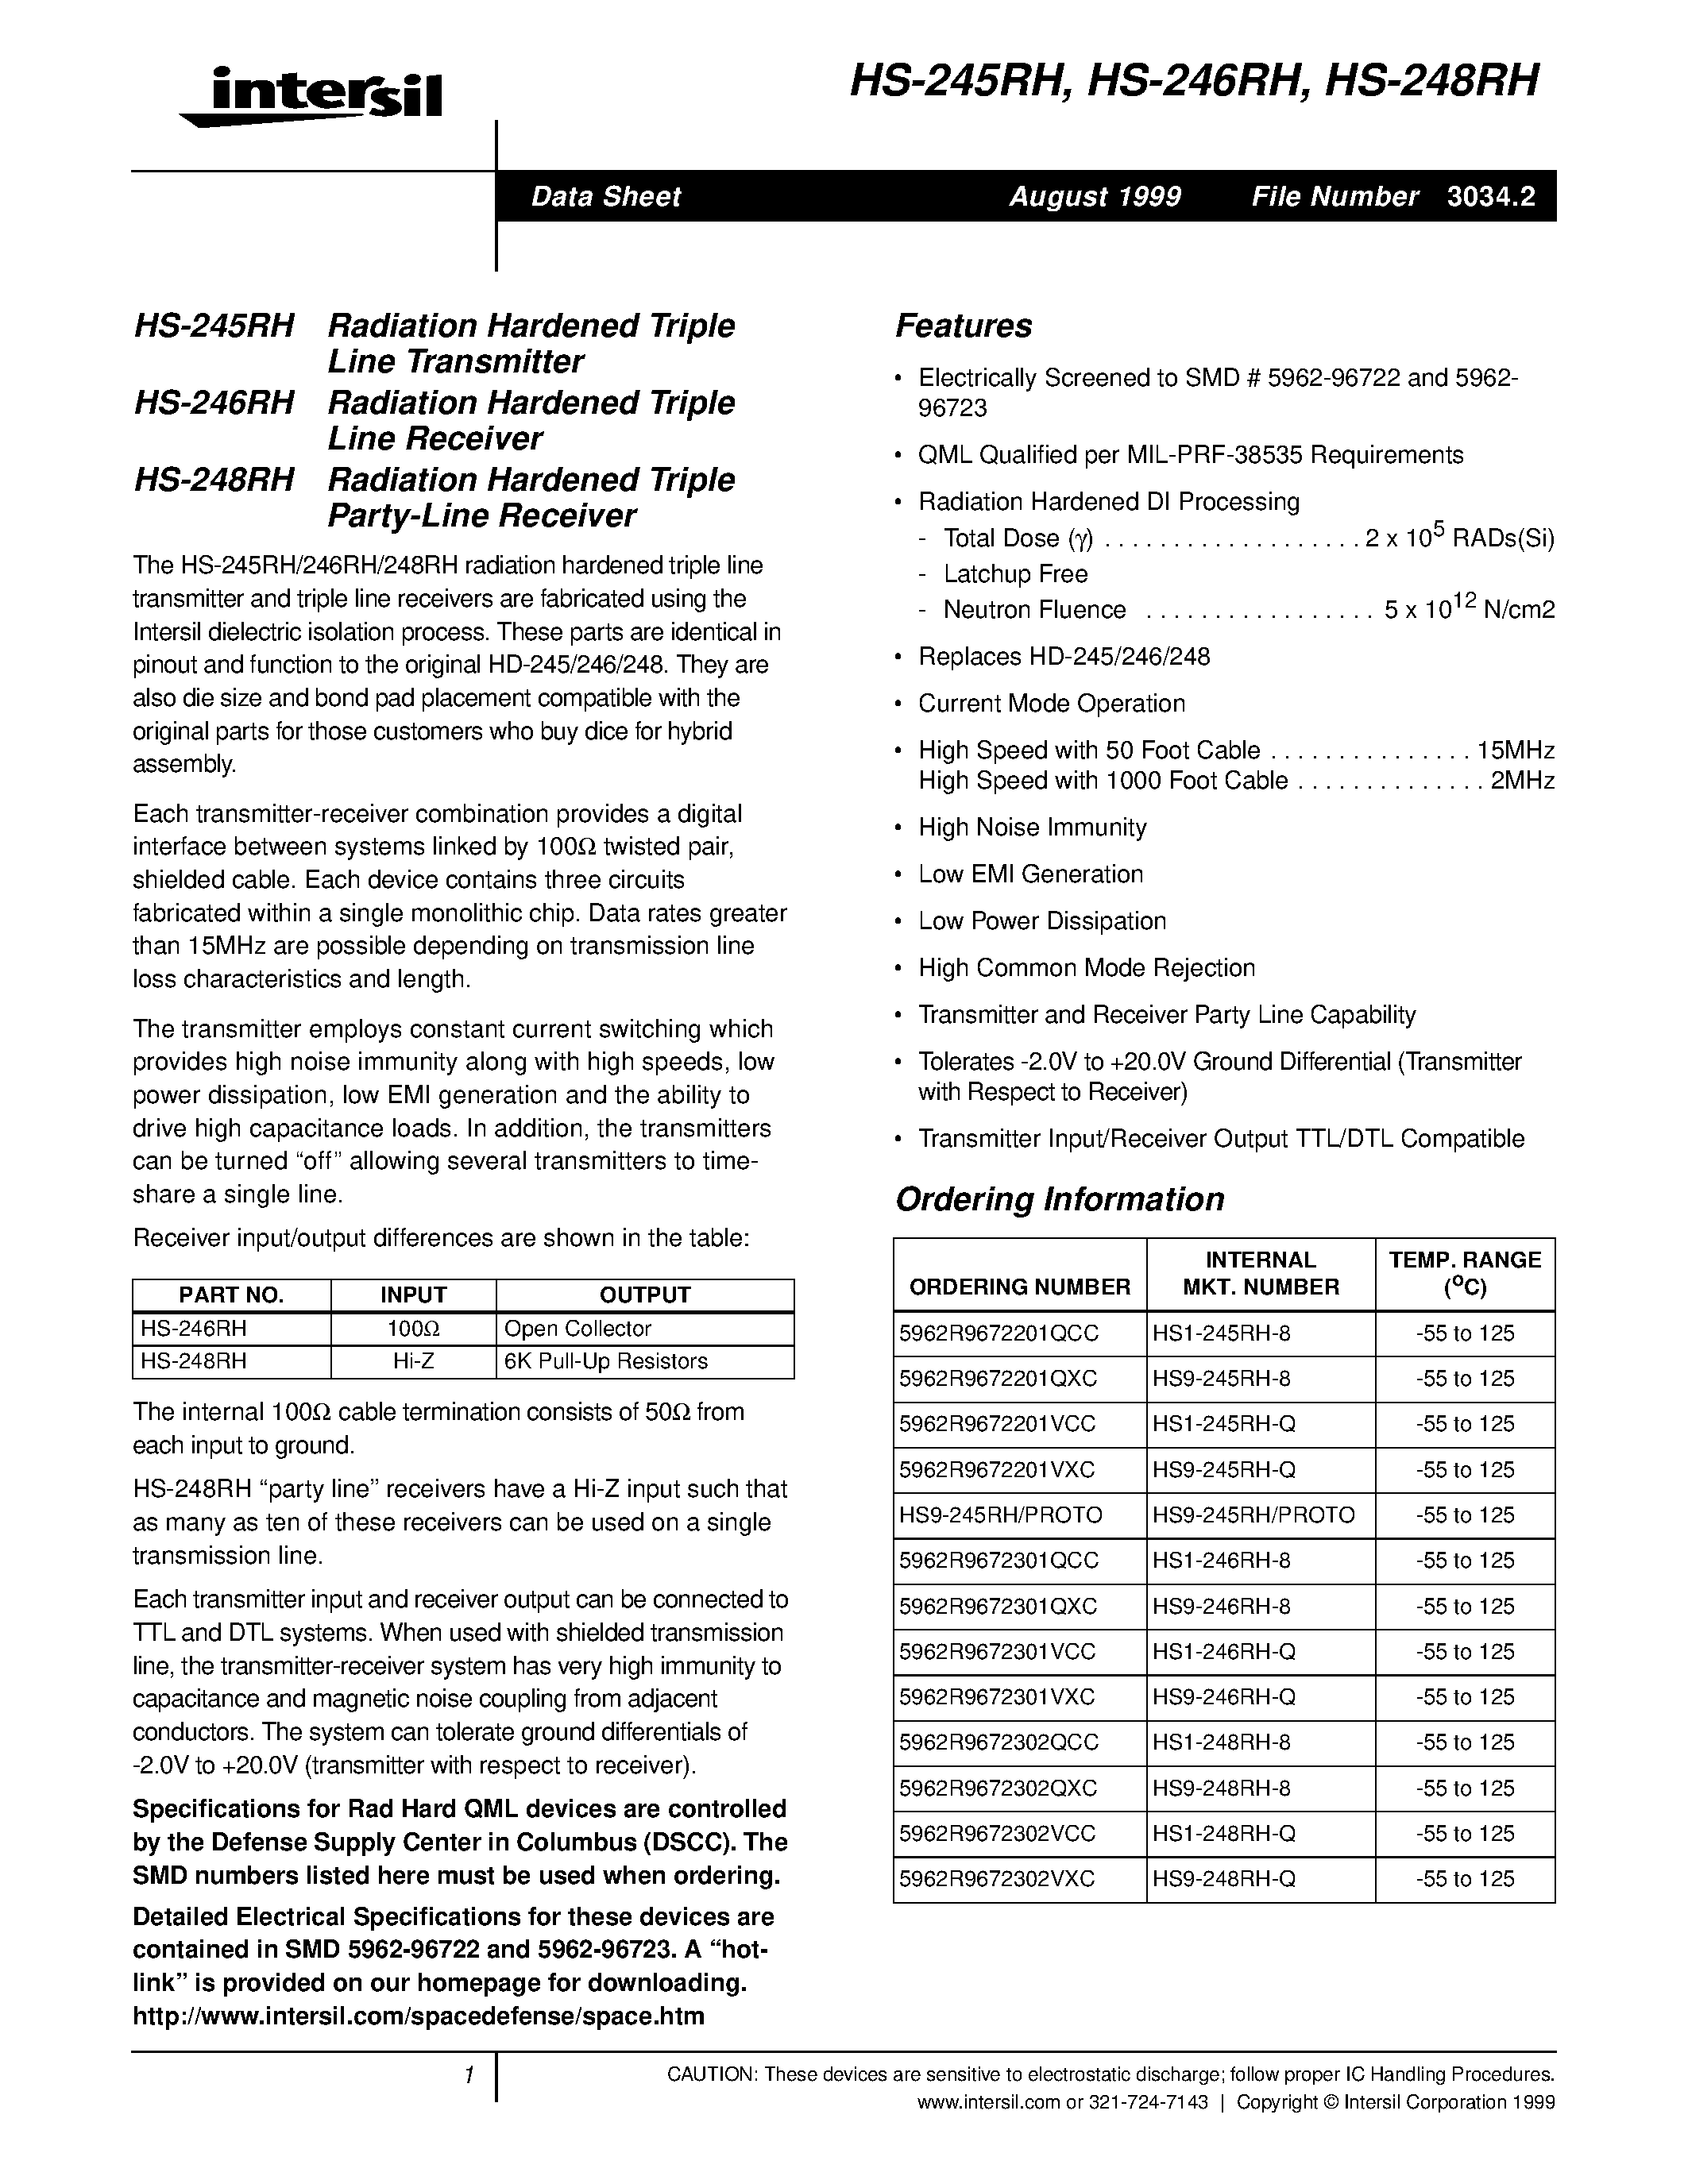 Даташит HS9-245RH-8 - Radiation Hardened Triple Line(party-Line) Transmitter страница 1